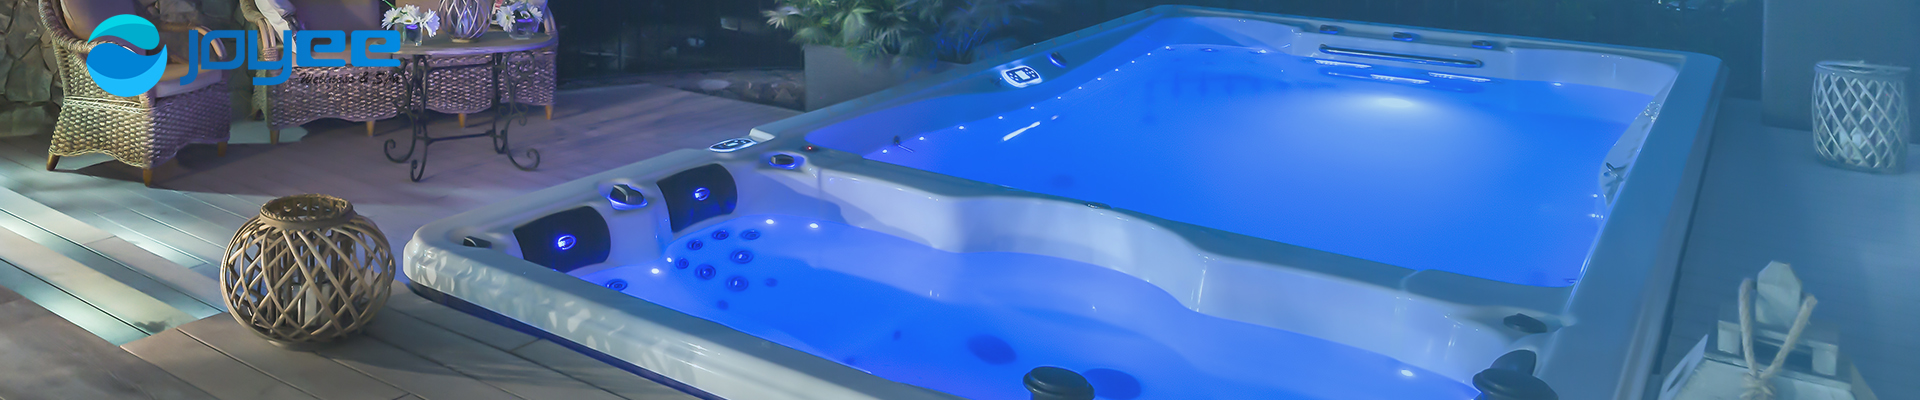 swimming-spa-pool 1